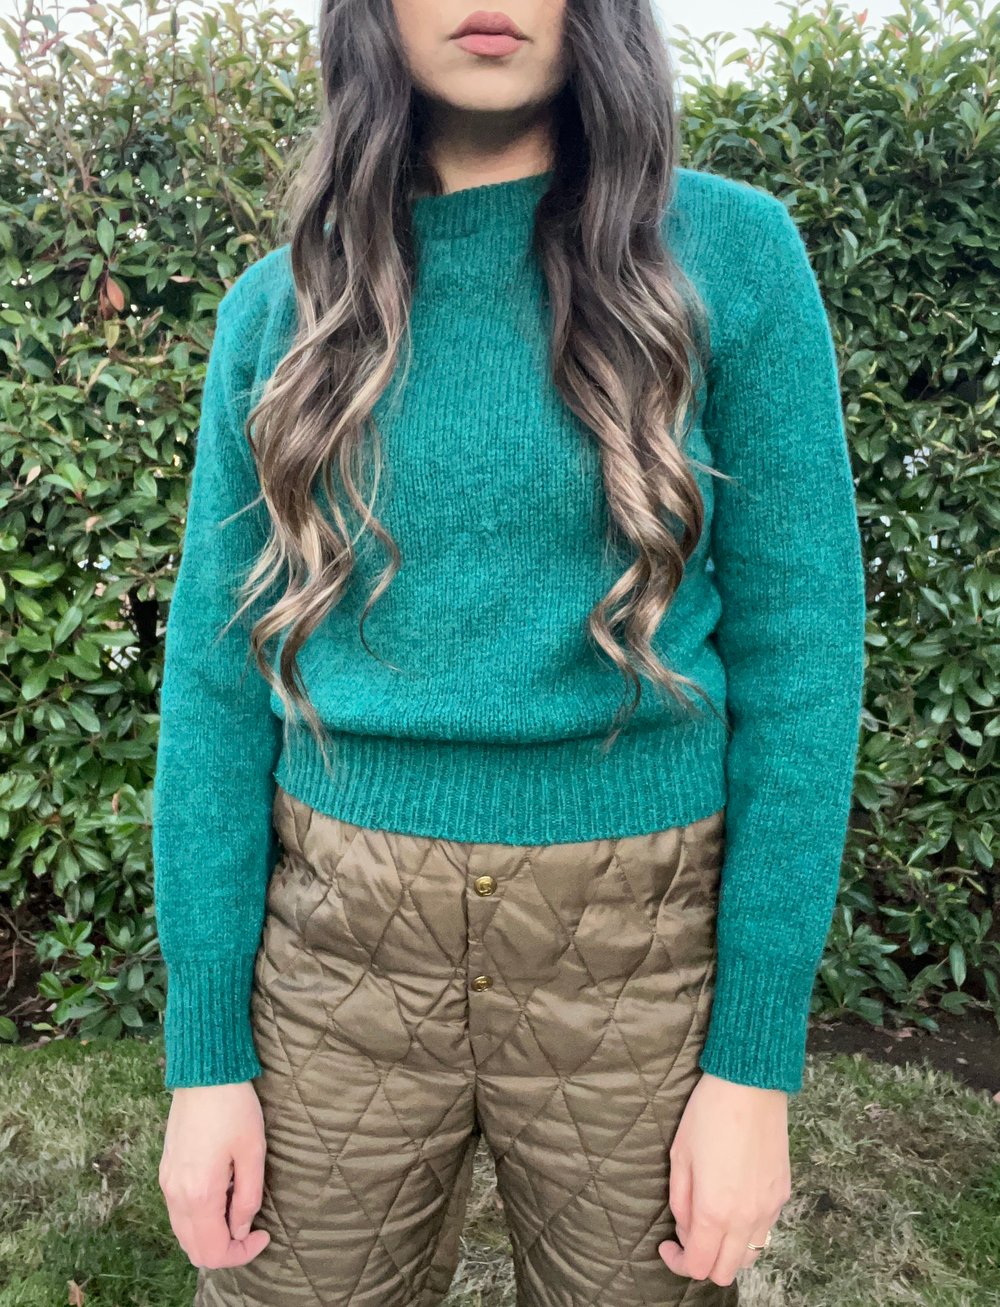 Vintage 70’s L.L. Bean Green Wool Sweater (S)